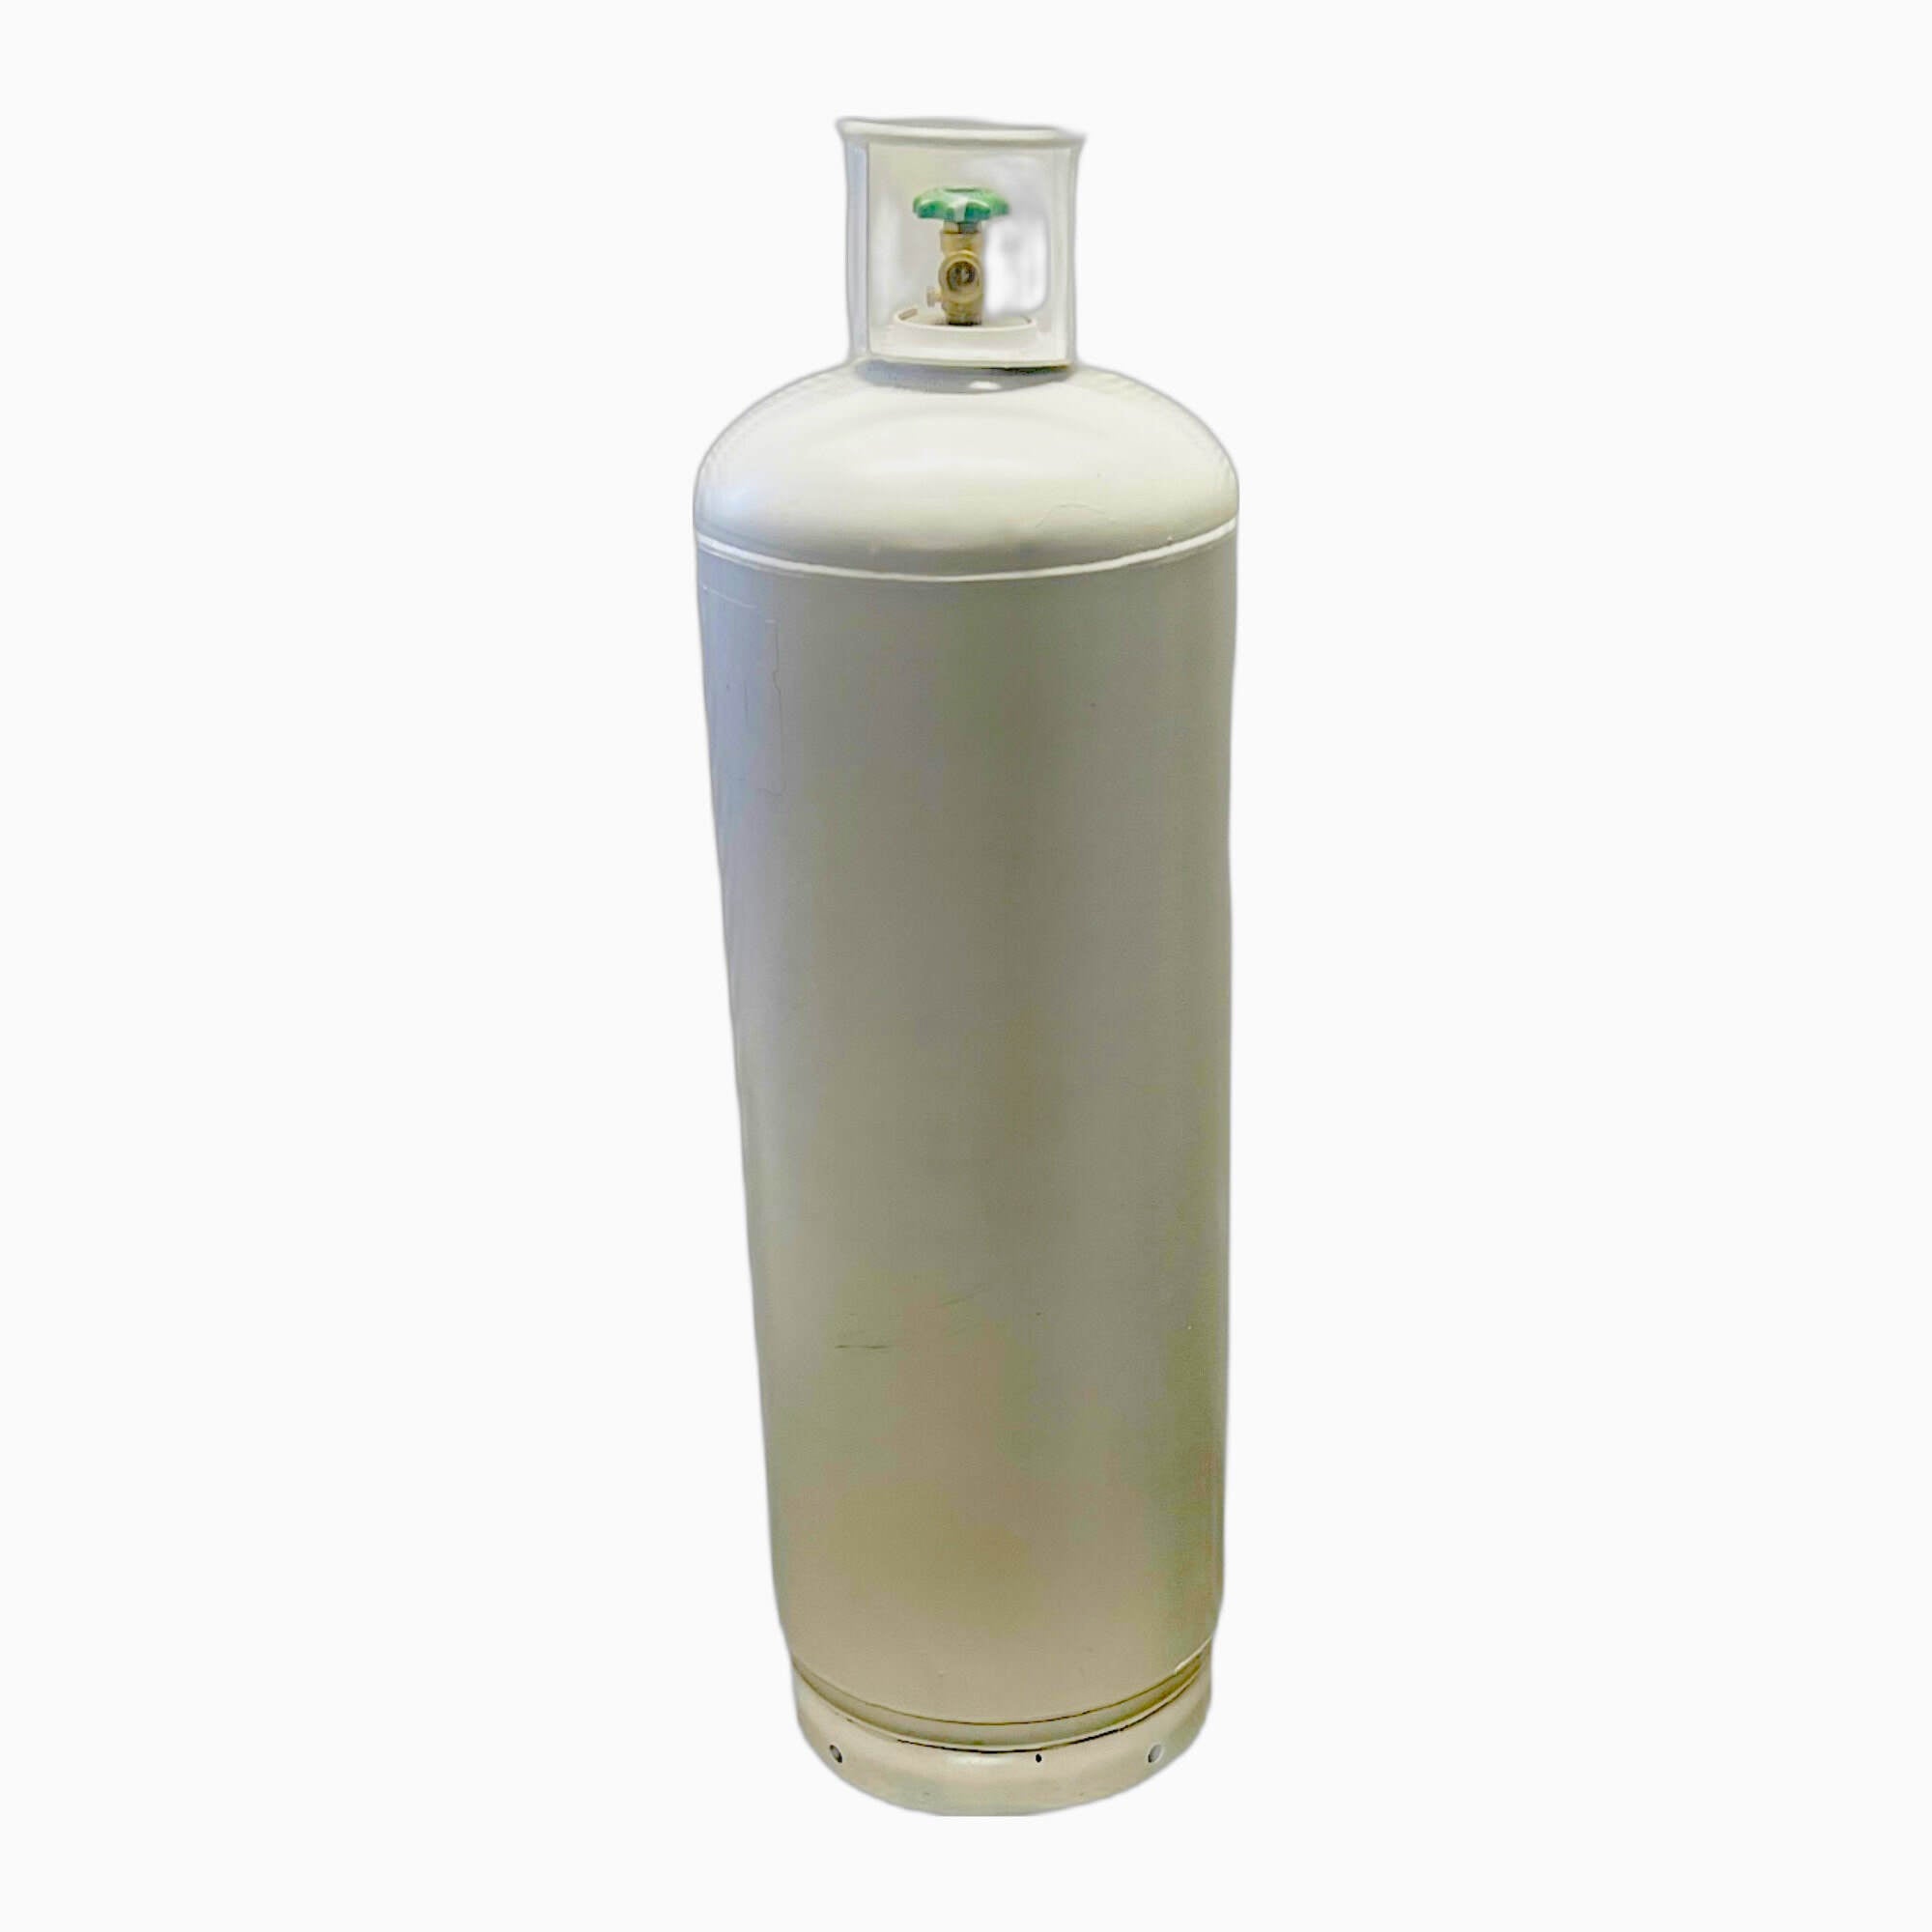 Buy Propane Gas Cylinders, LPG Bottles